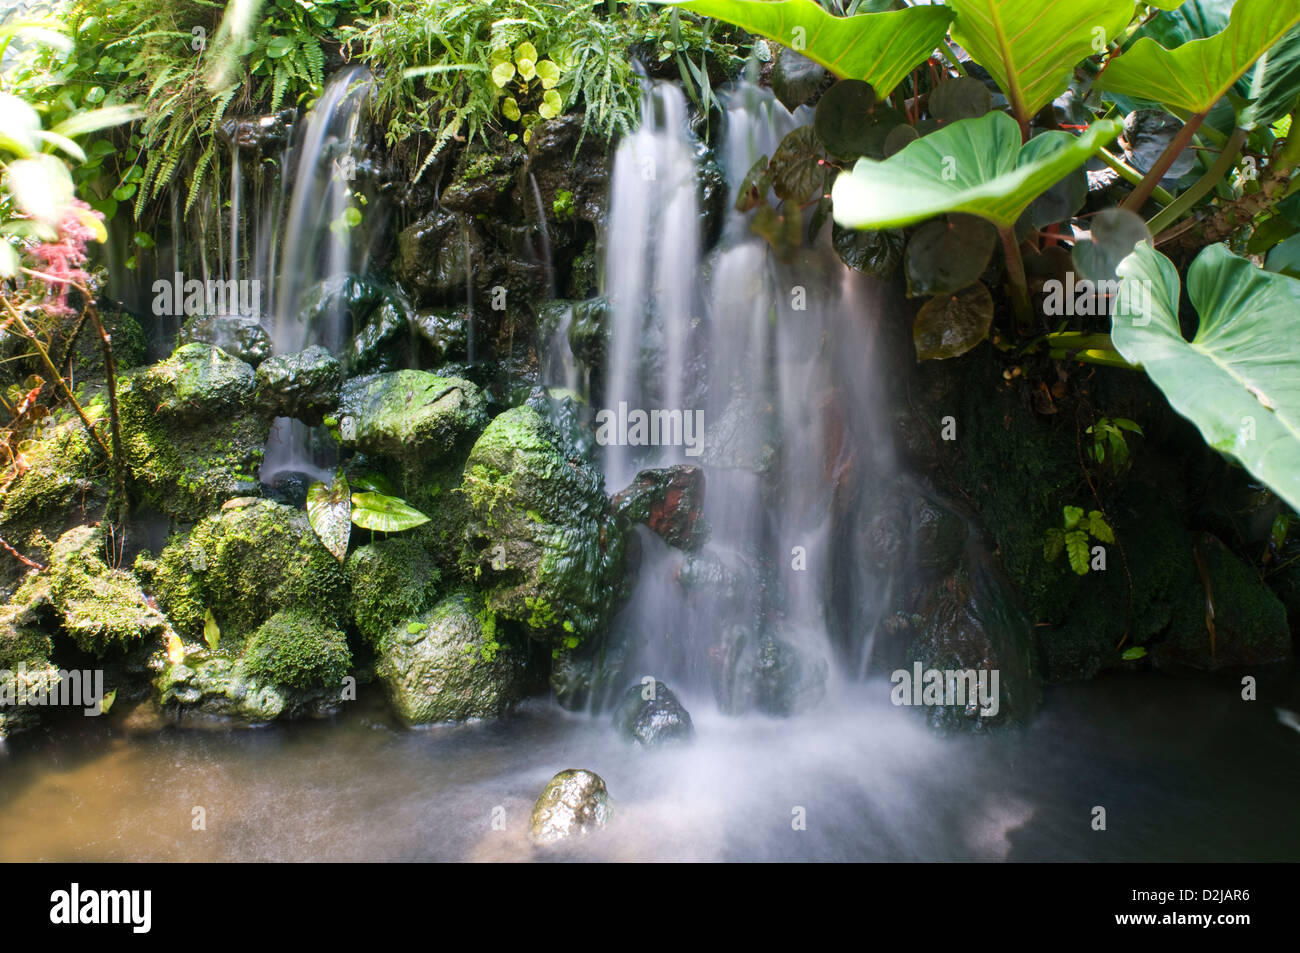 Fontana in miniatura, giardini botanici, Singapore Foto Stock